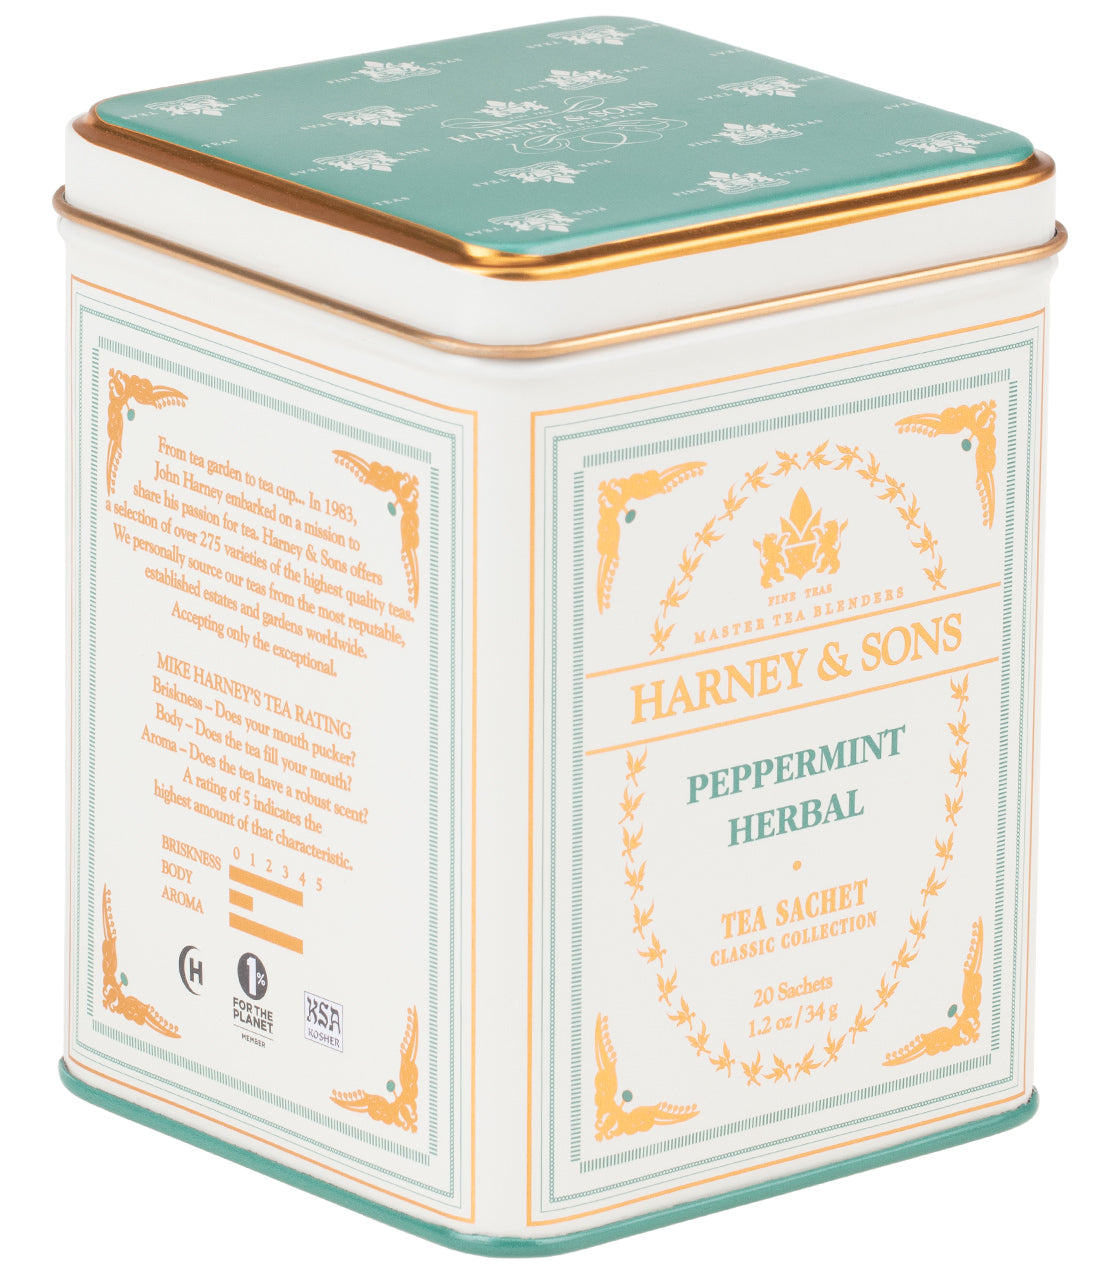 Peppermint Herbal - Sachets Classic Tin of 20 Sachets - Harney & Sons Fine Teas